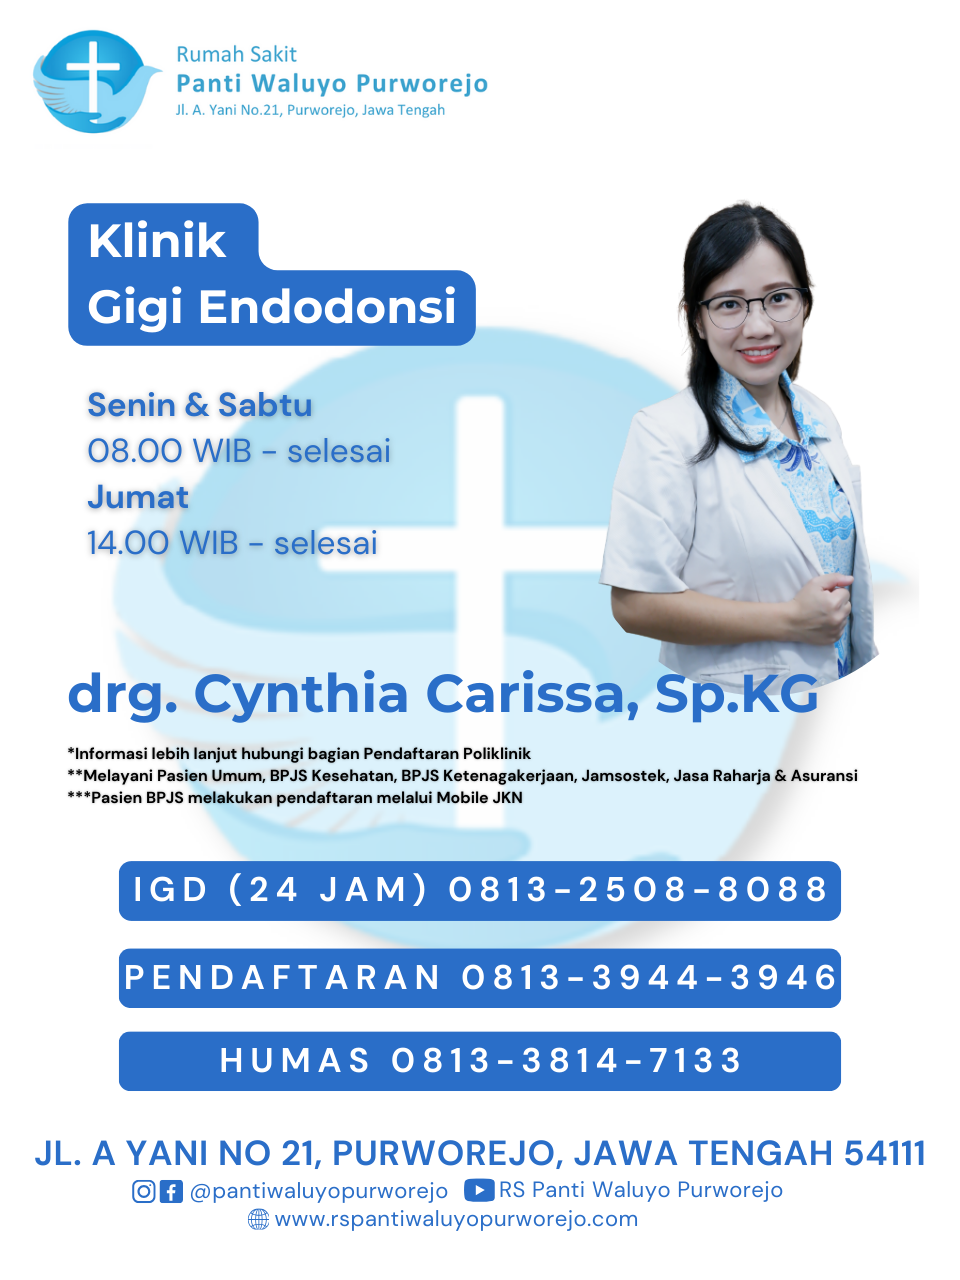 drg. Cynthia Carissa, Sp.KG